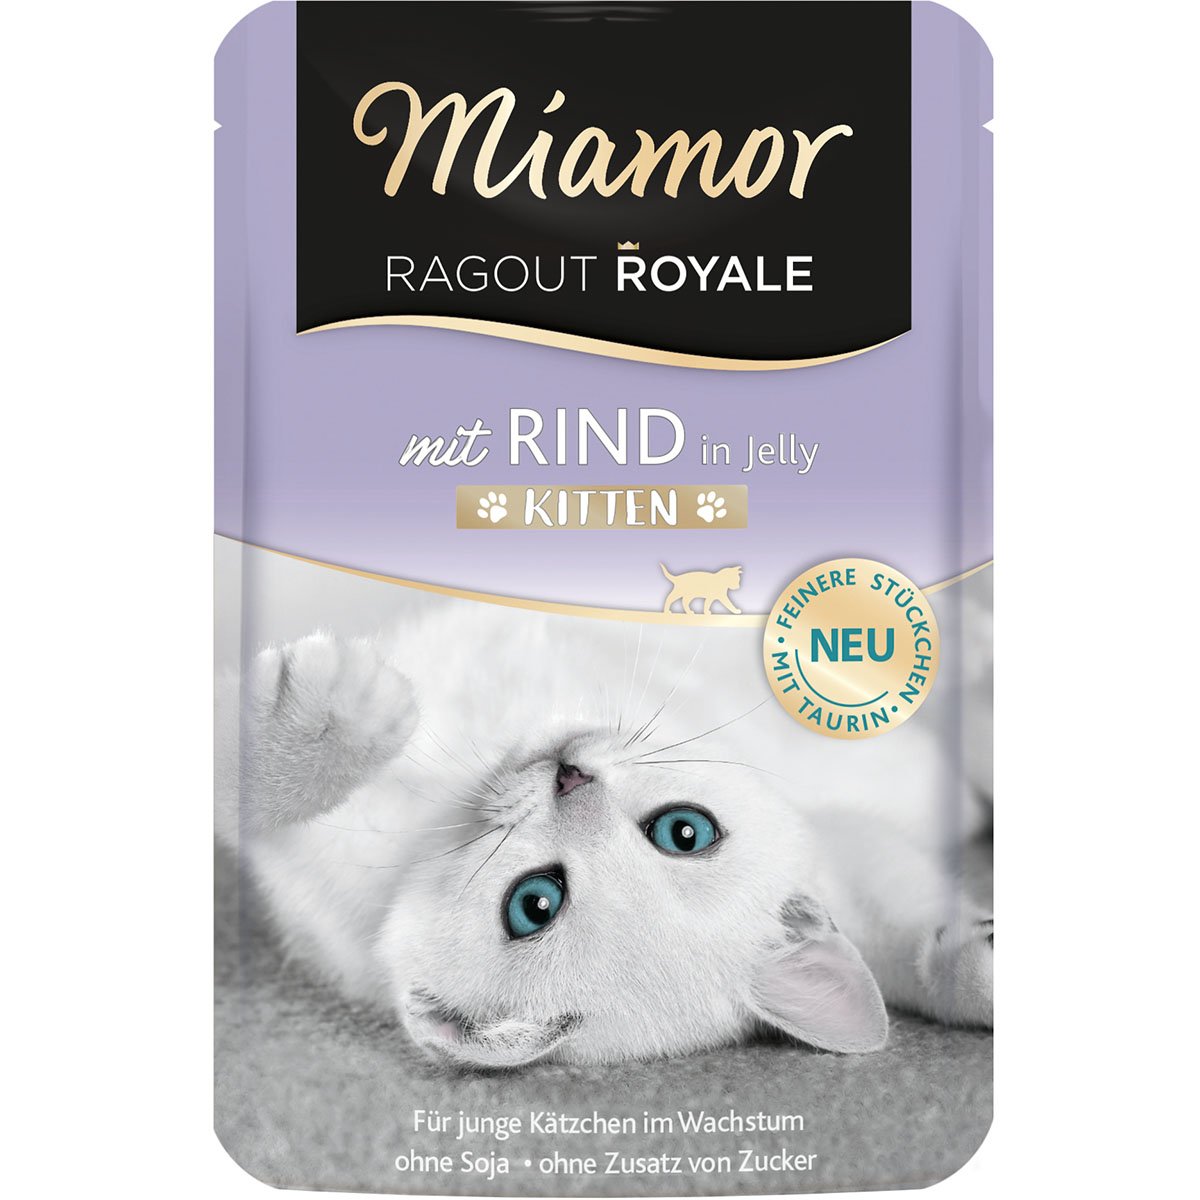 Miamor Ragout Royale Kitten Rind in Jelly 44x100g